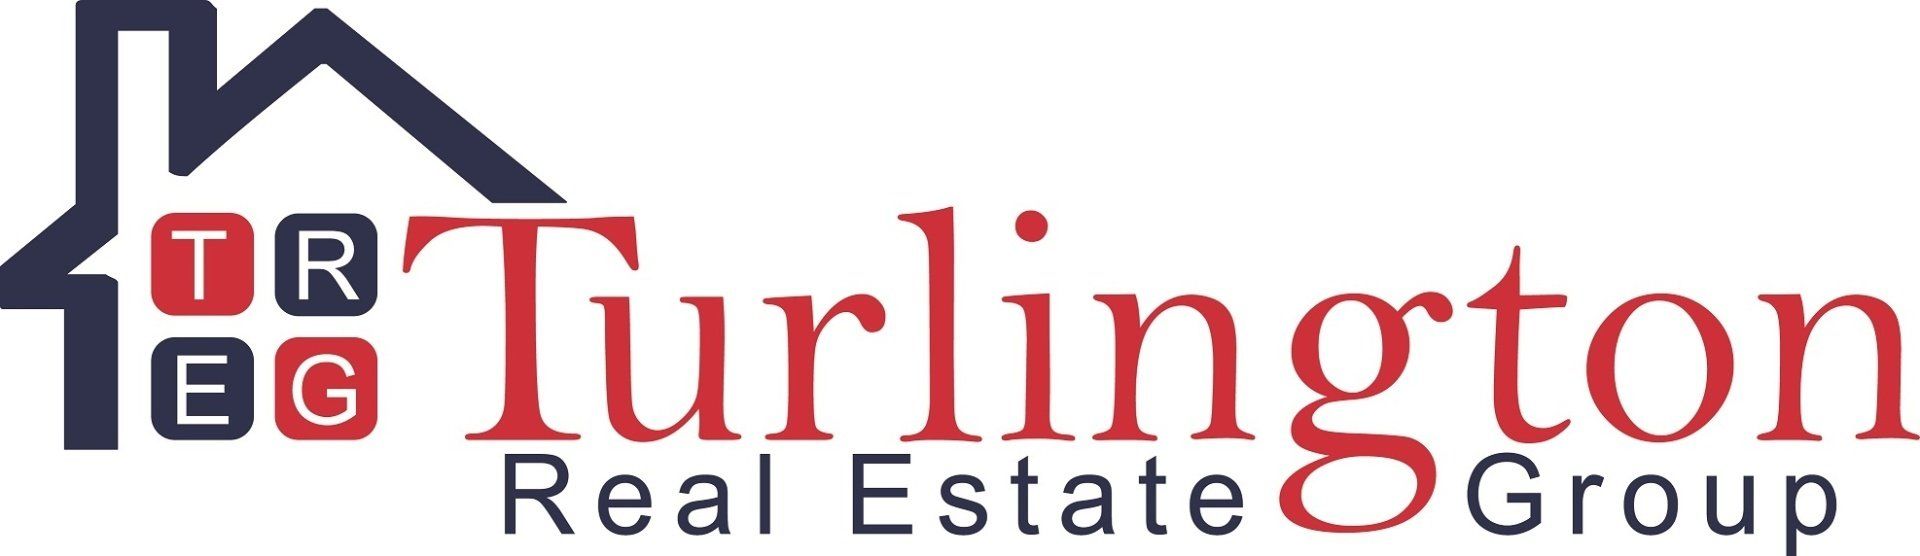 Turlington Real Estate Group, Inc. Logo